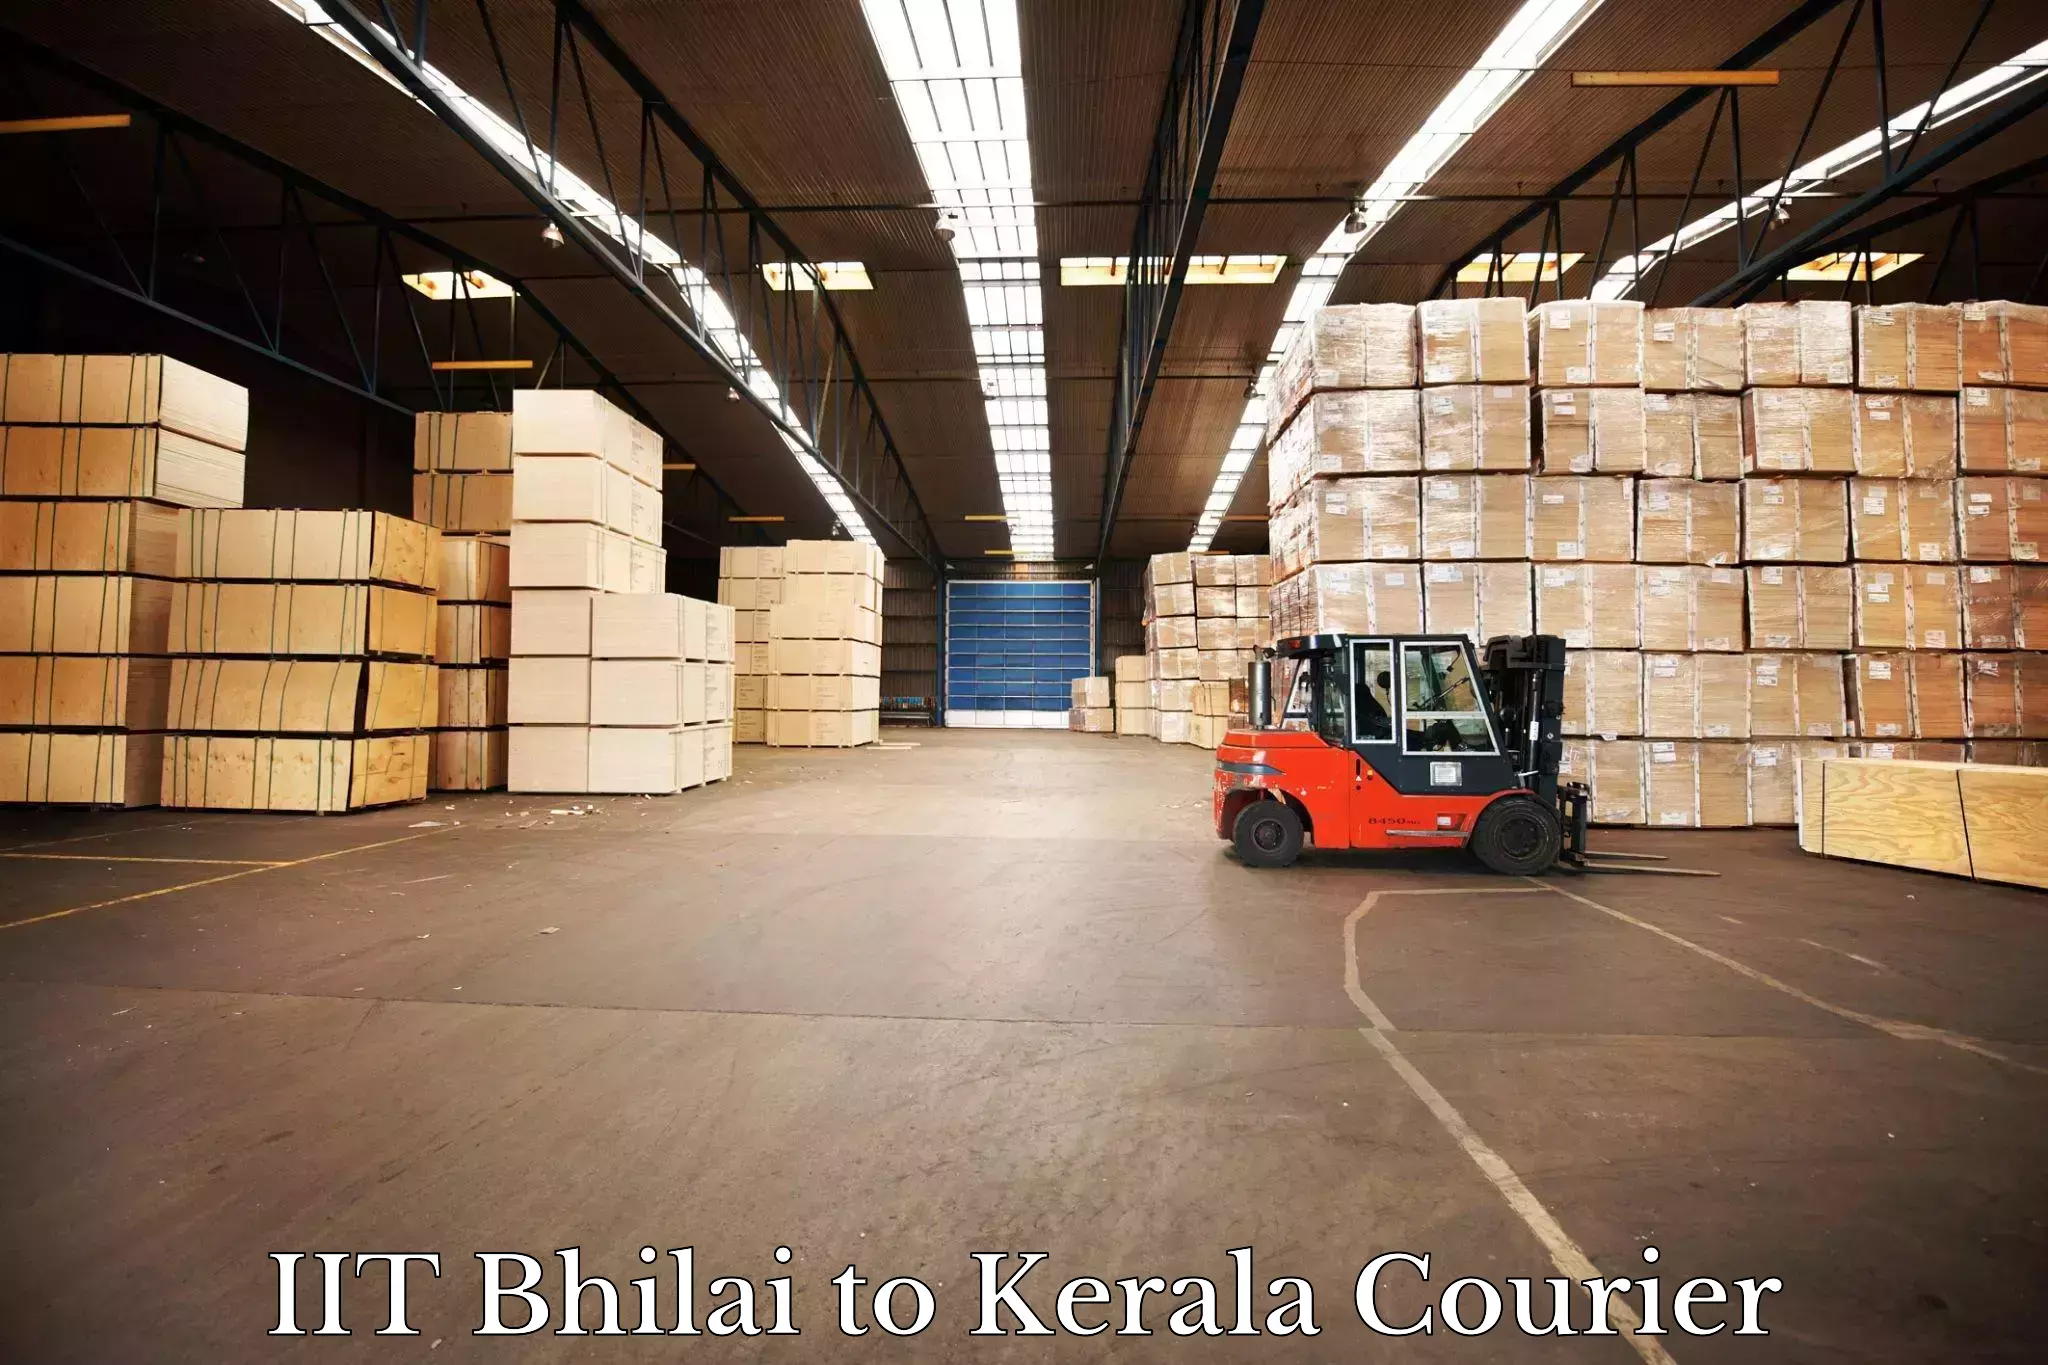 Global logistics network IIT Bhilai to Kuttikol